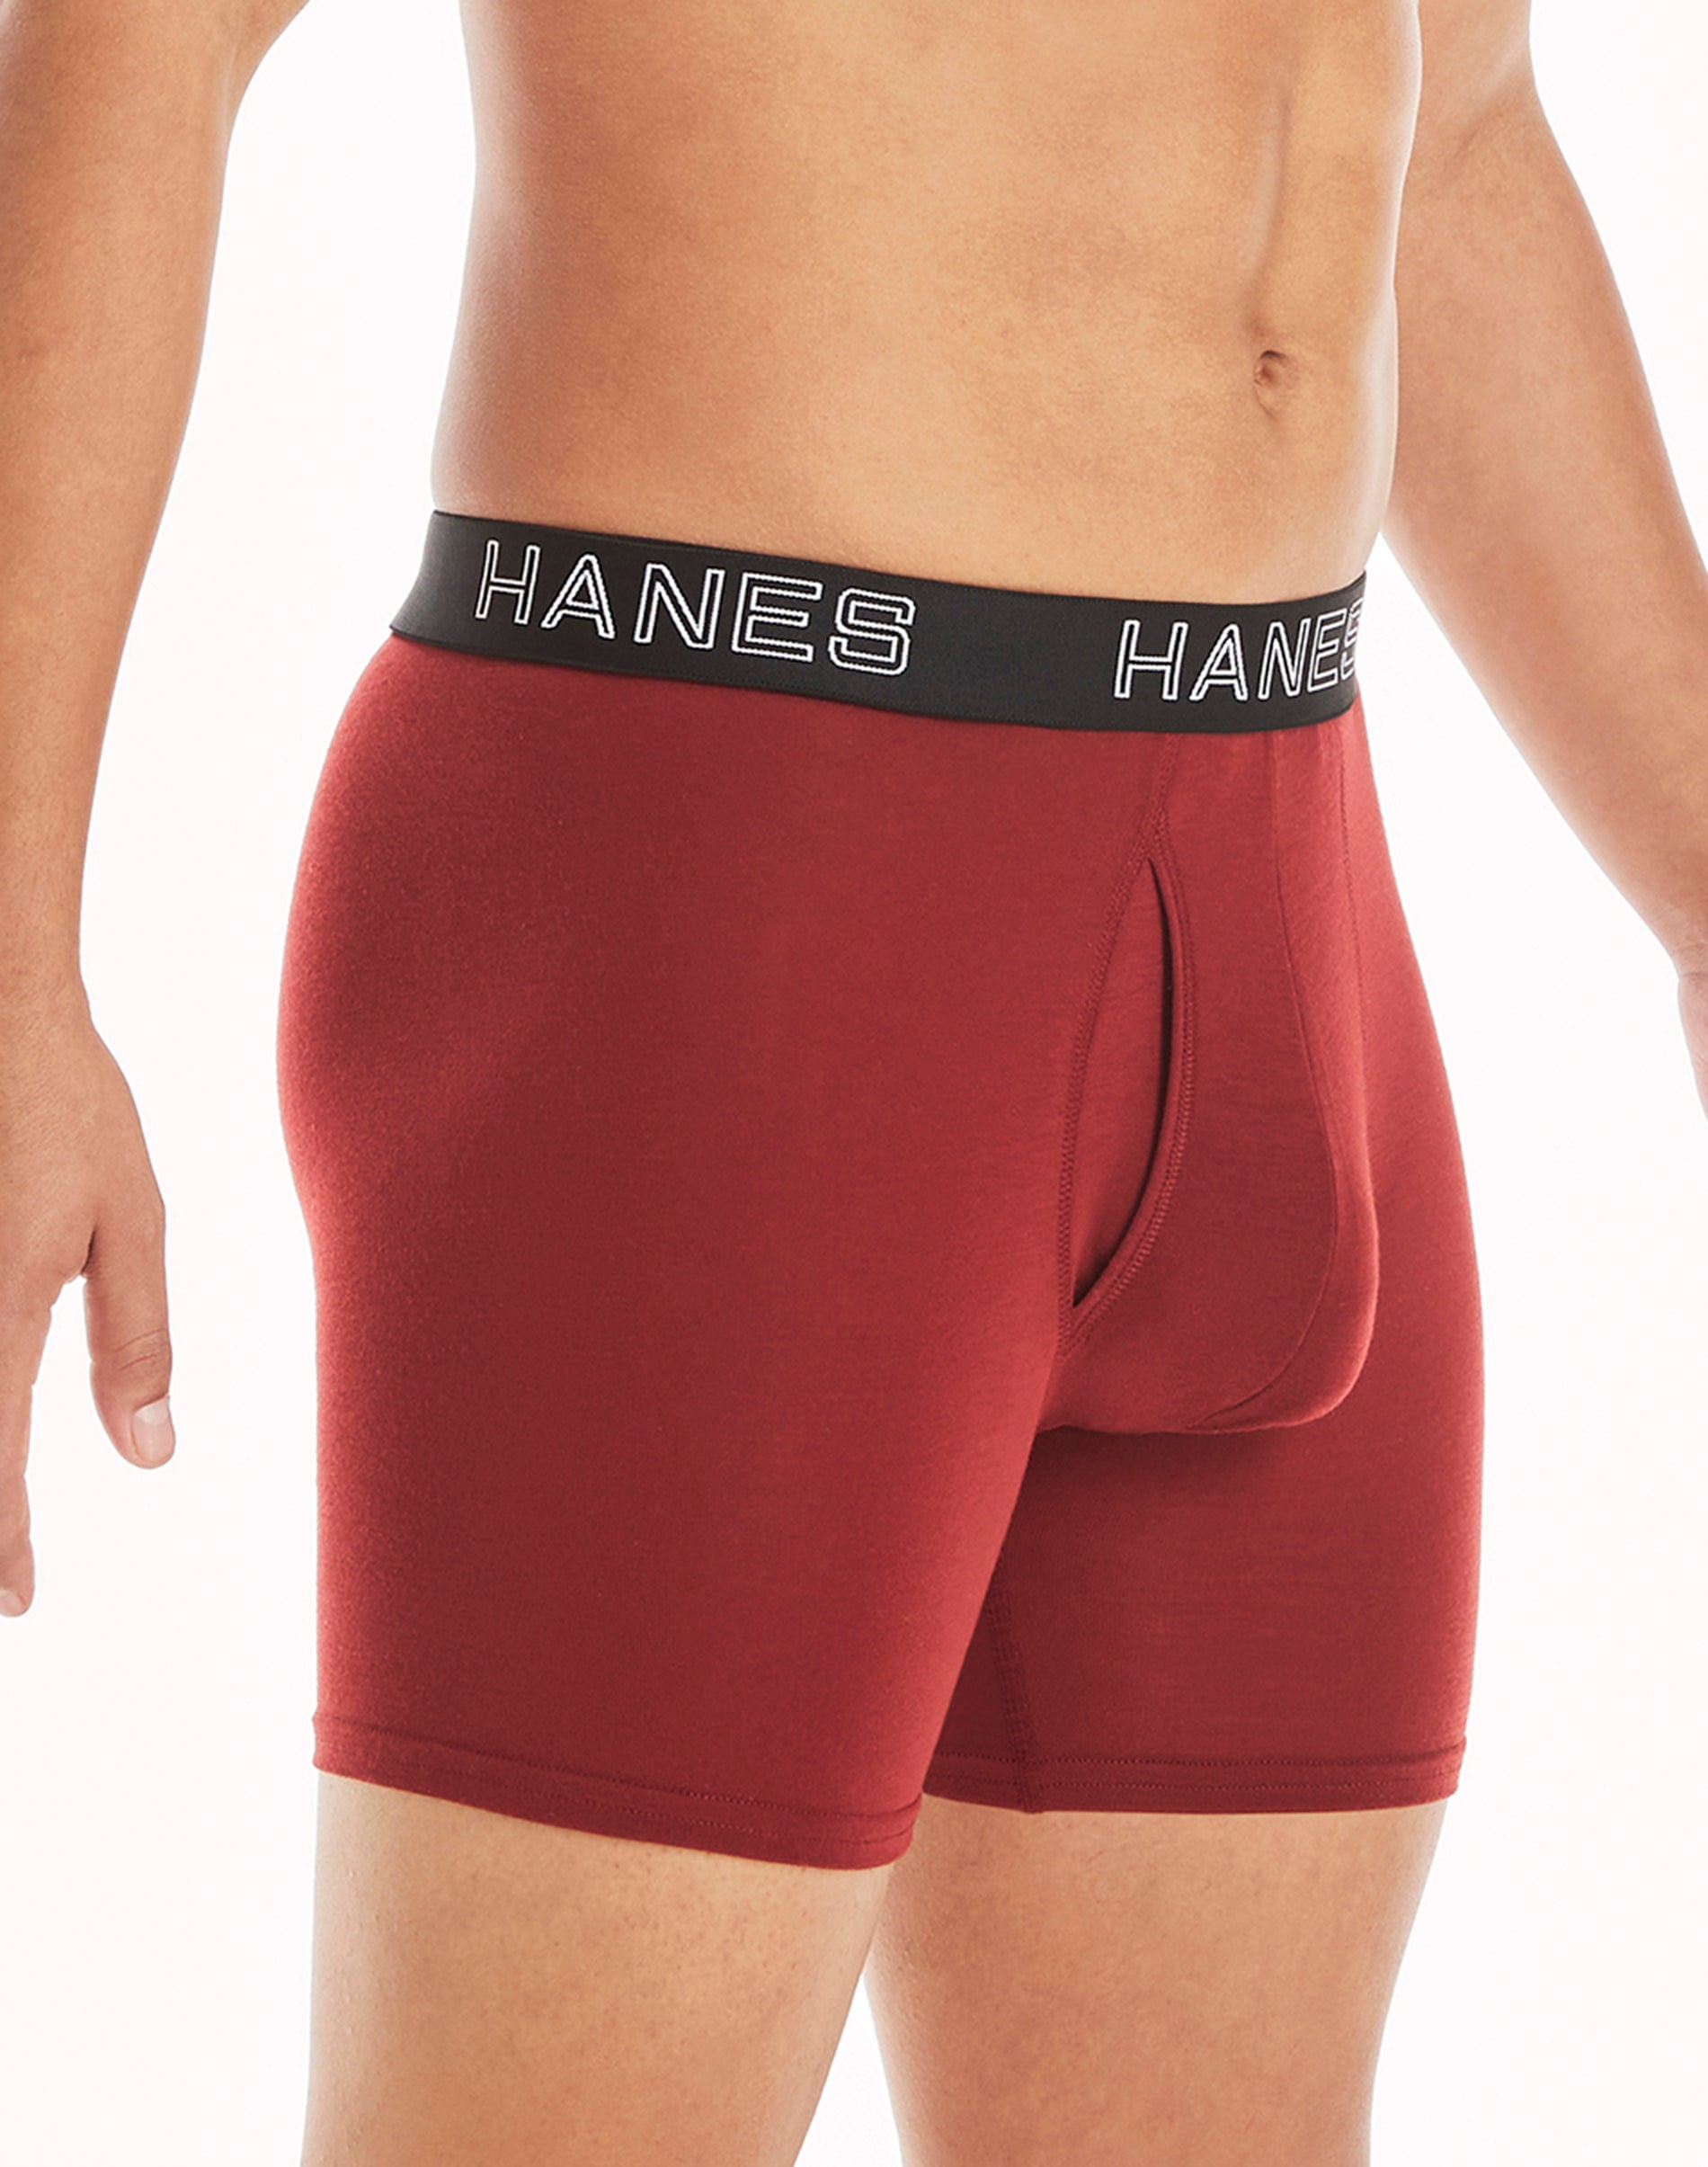 Hanes helps men find 'ball-ance' with new boxer briefs - Underlines Magazine